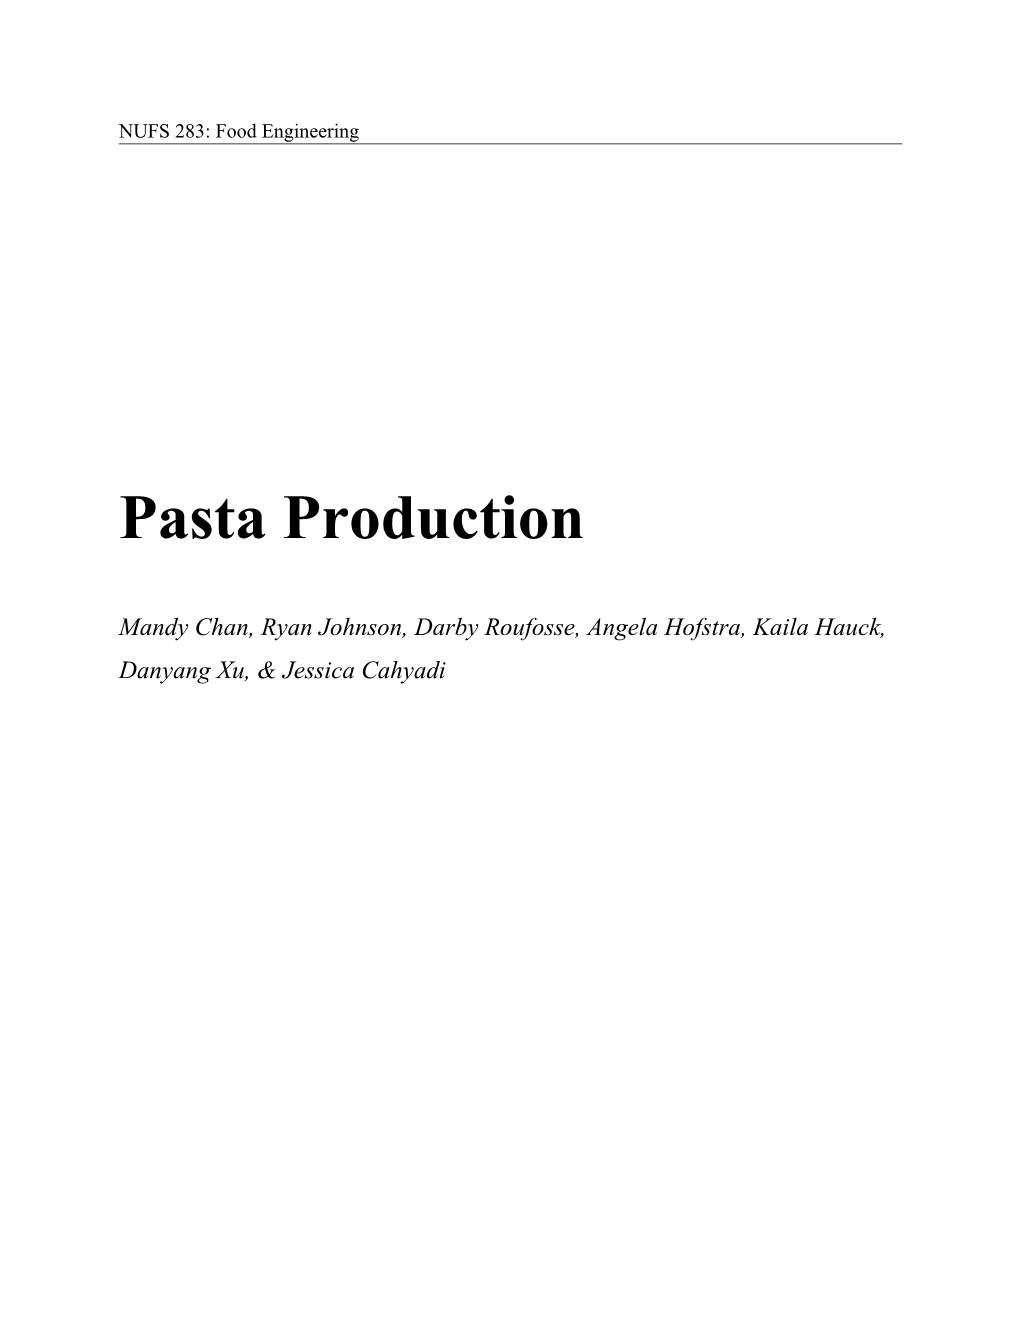 NUFS 283: Pasta Processing